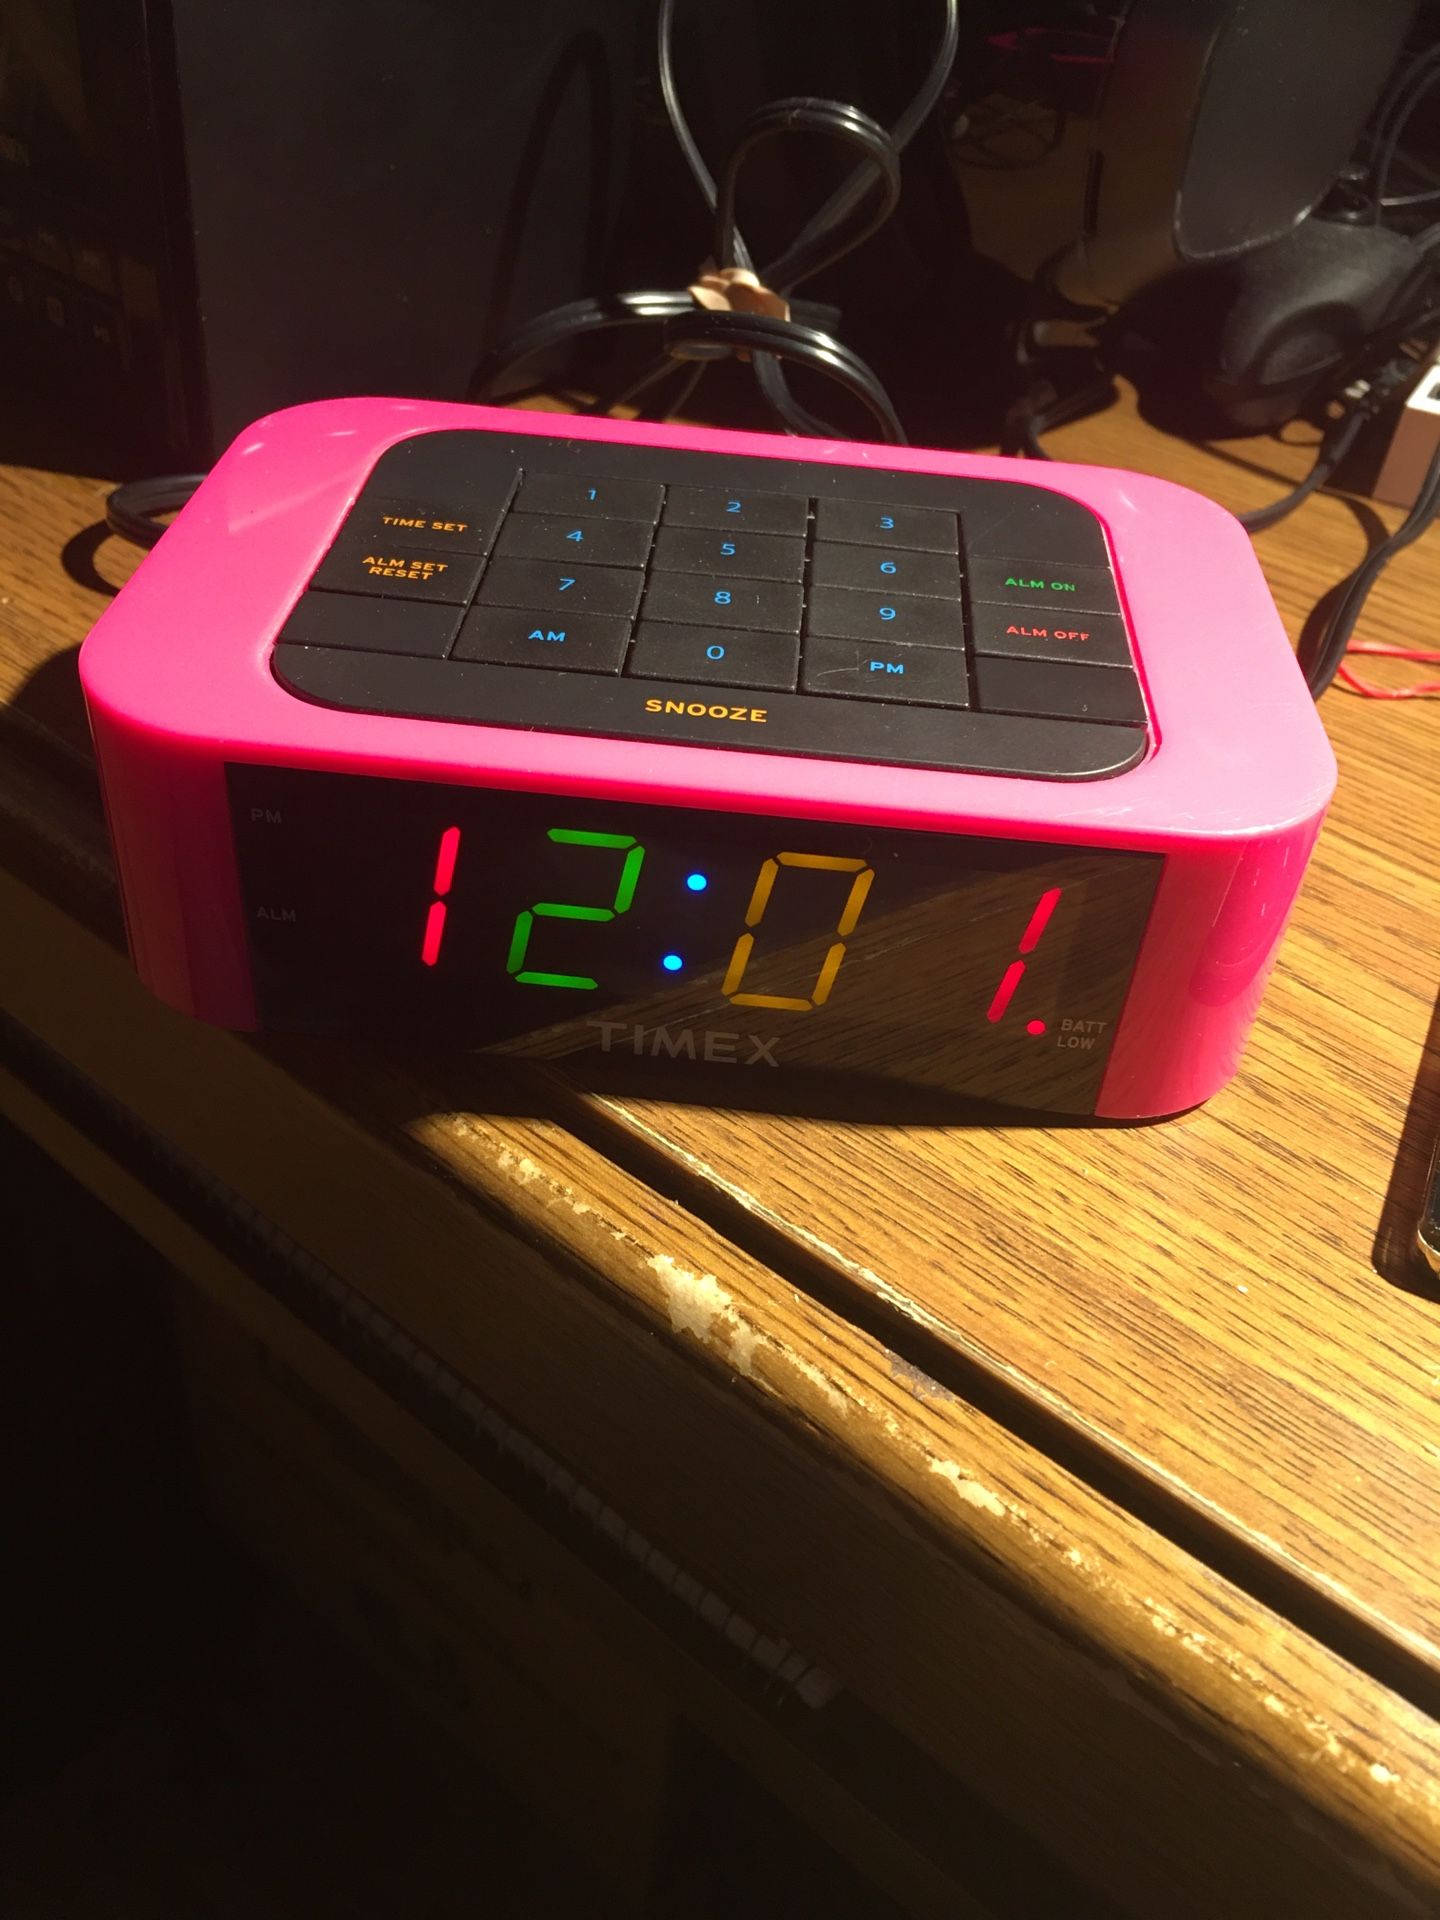 Timex color display clock